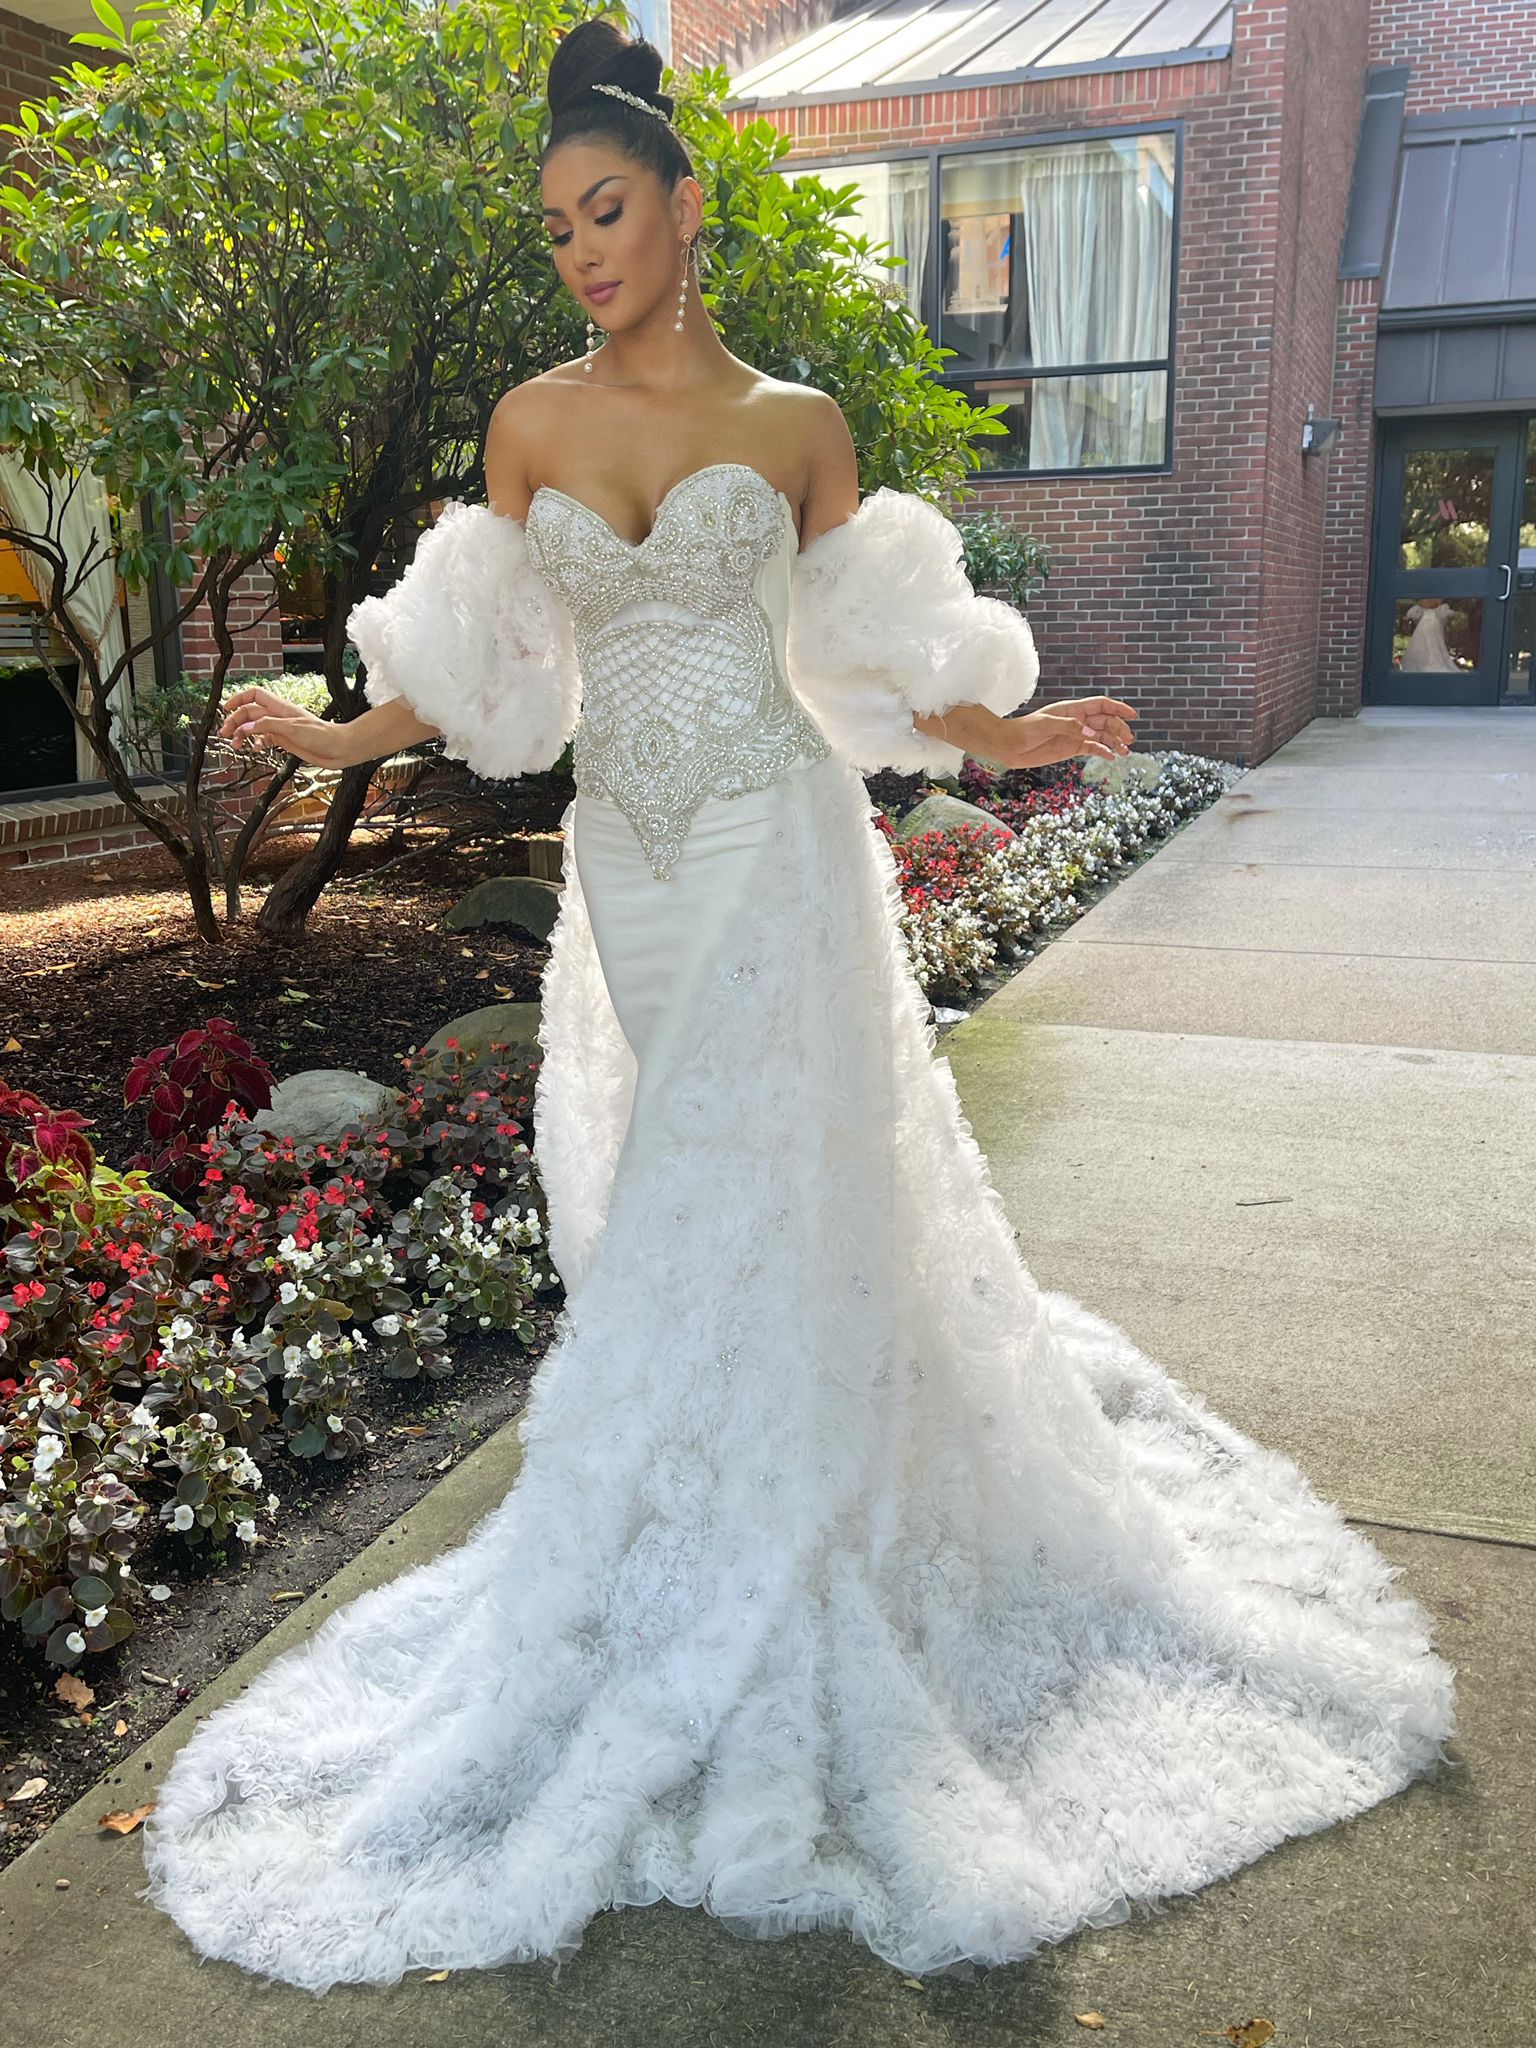 Eridana simple corset wedding dress - Bridal gown - Strapless